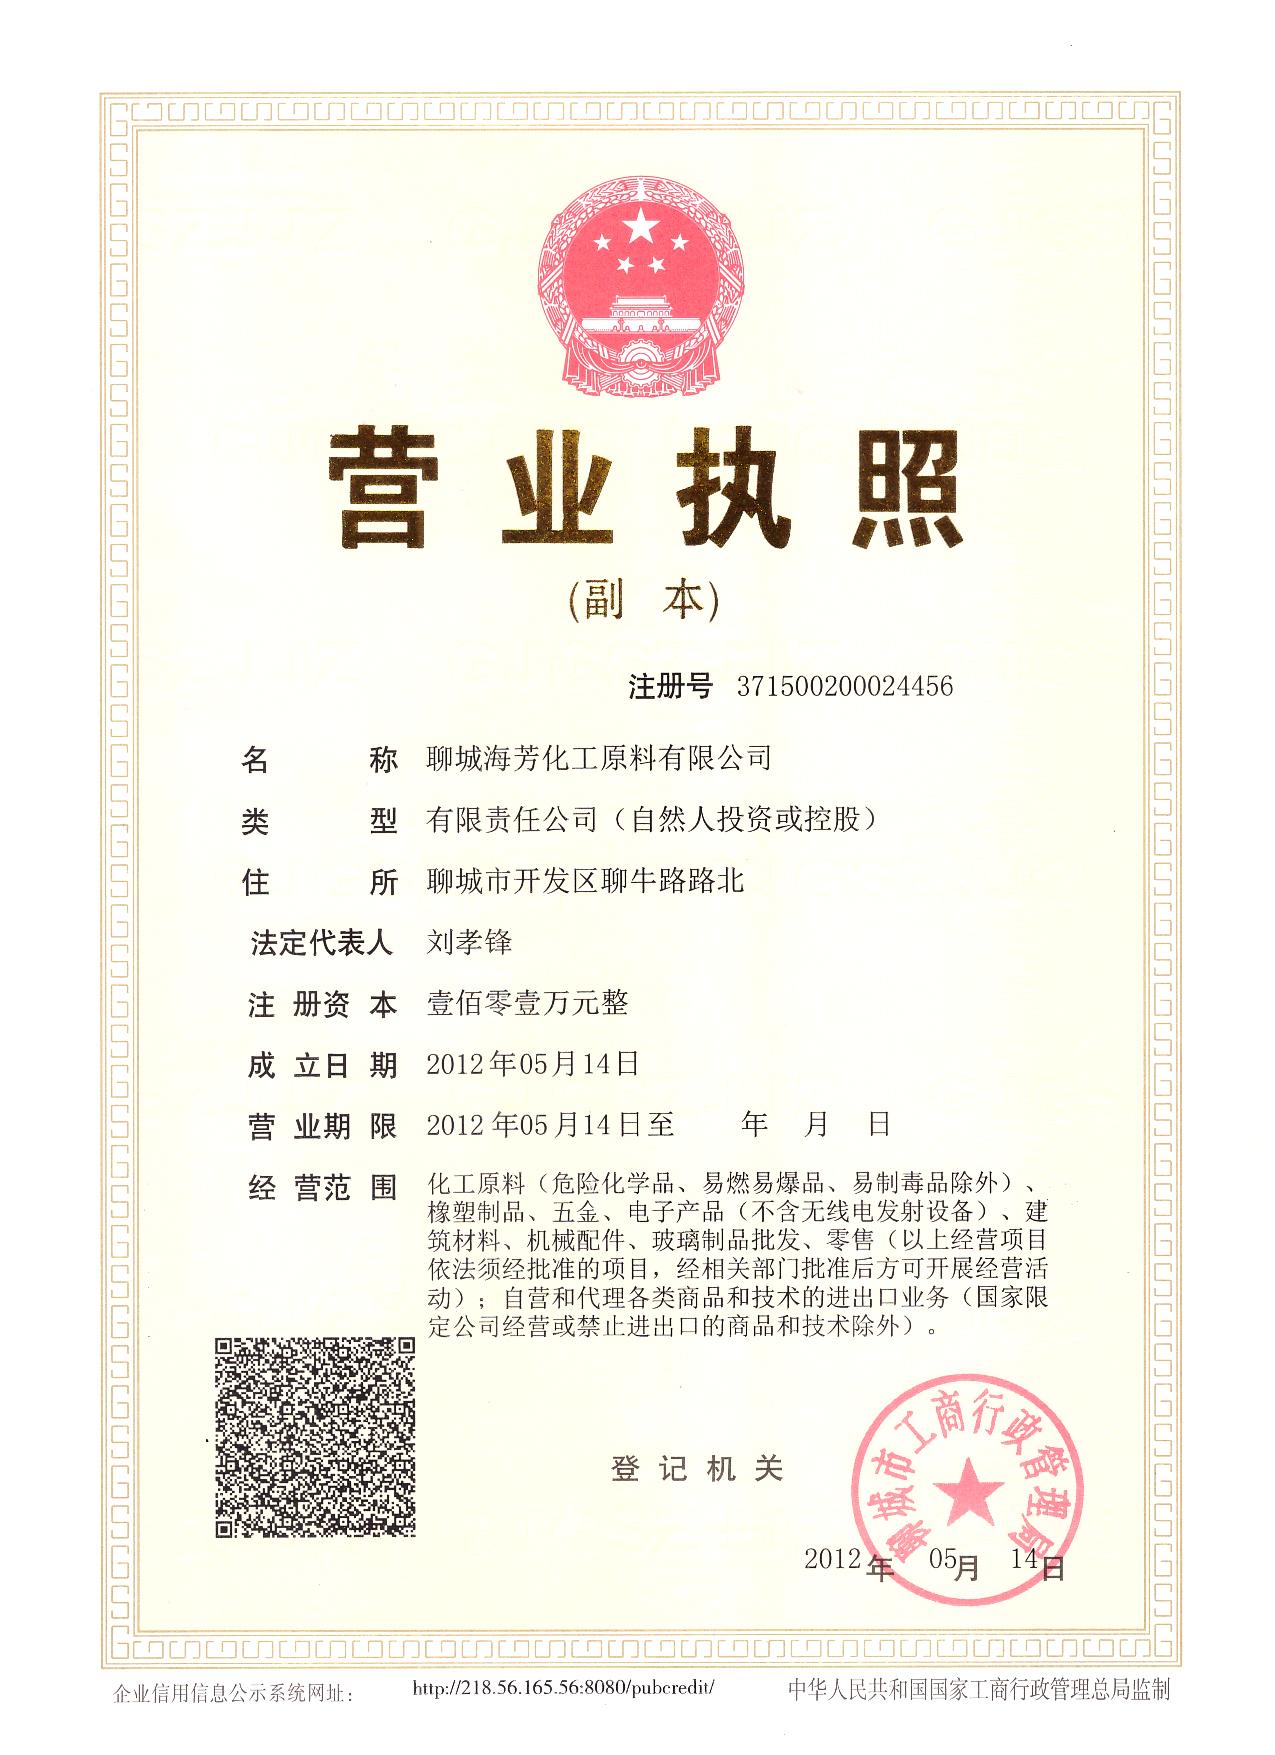 Liaocheng sea aryl Chemicals Co., Ltd